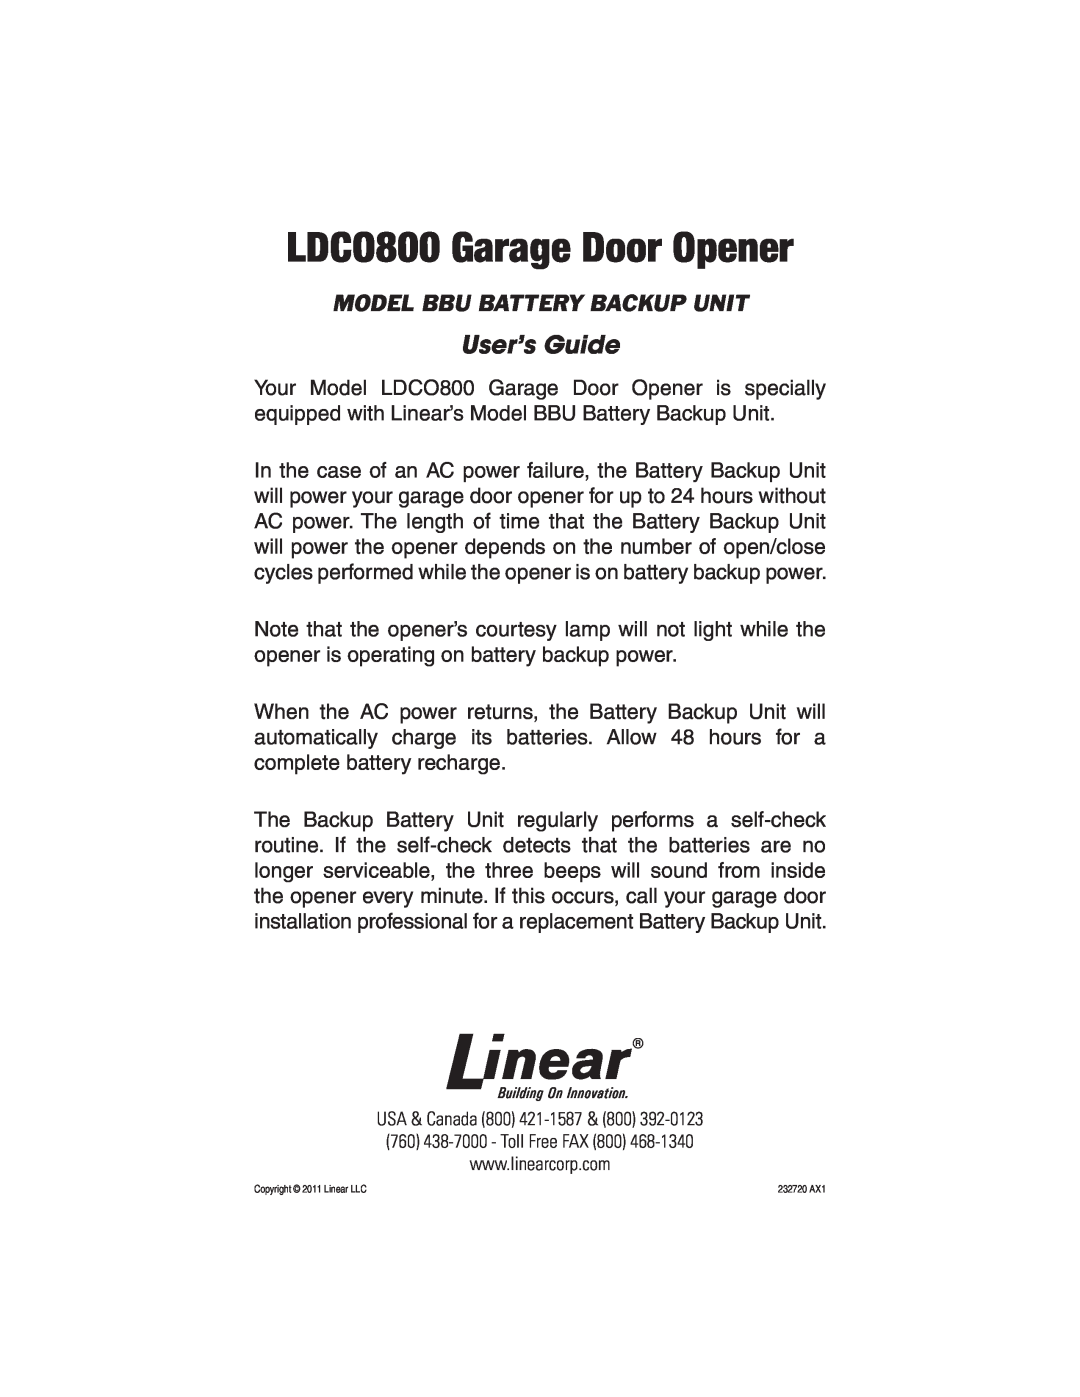 Linear LDC0800 manual LDCO800 Garage Door Opener, Model Bbu Battery Backup Unit, User’s Guide 